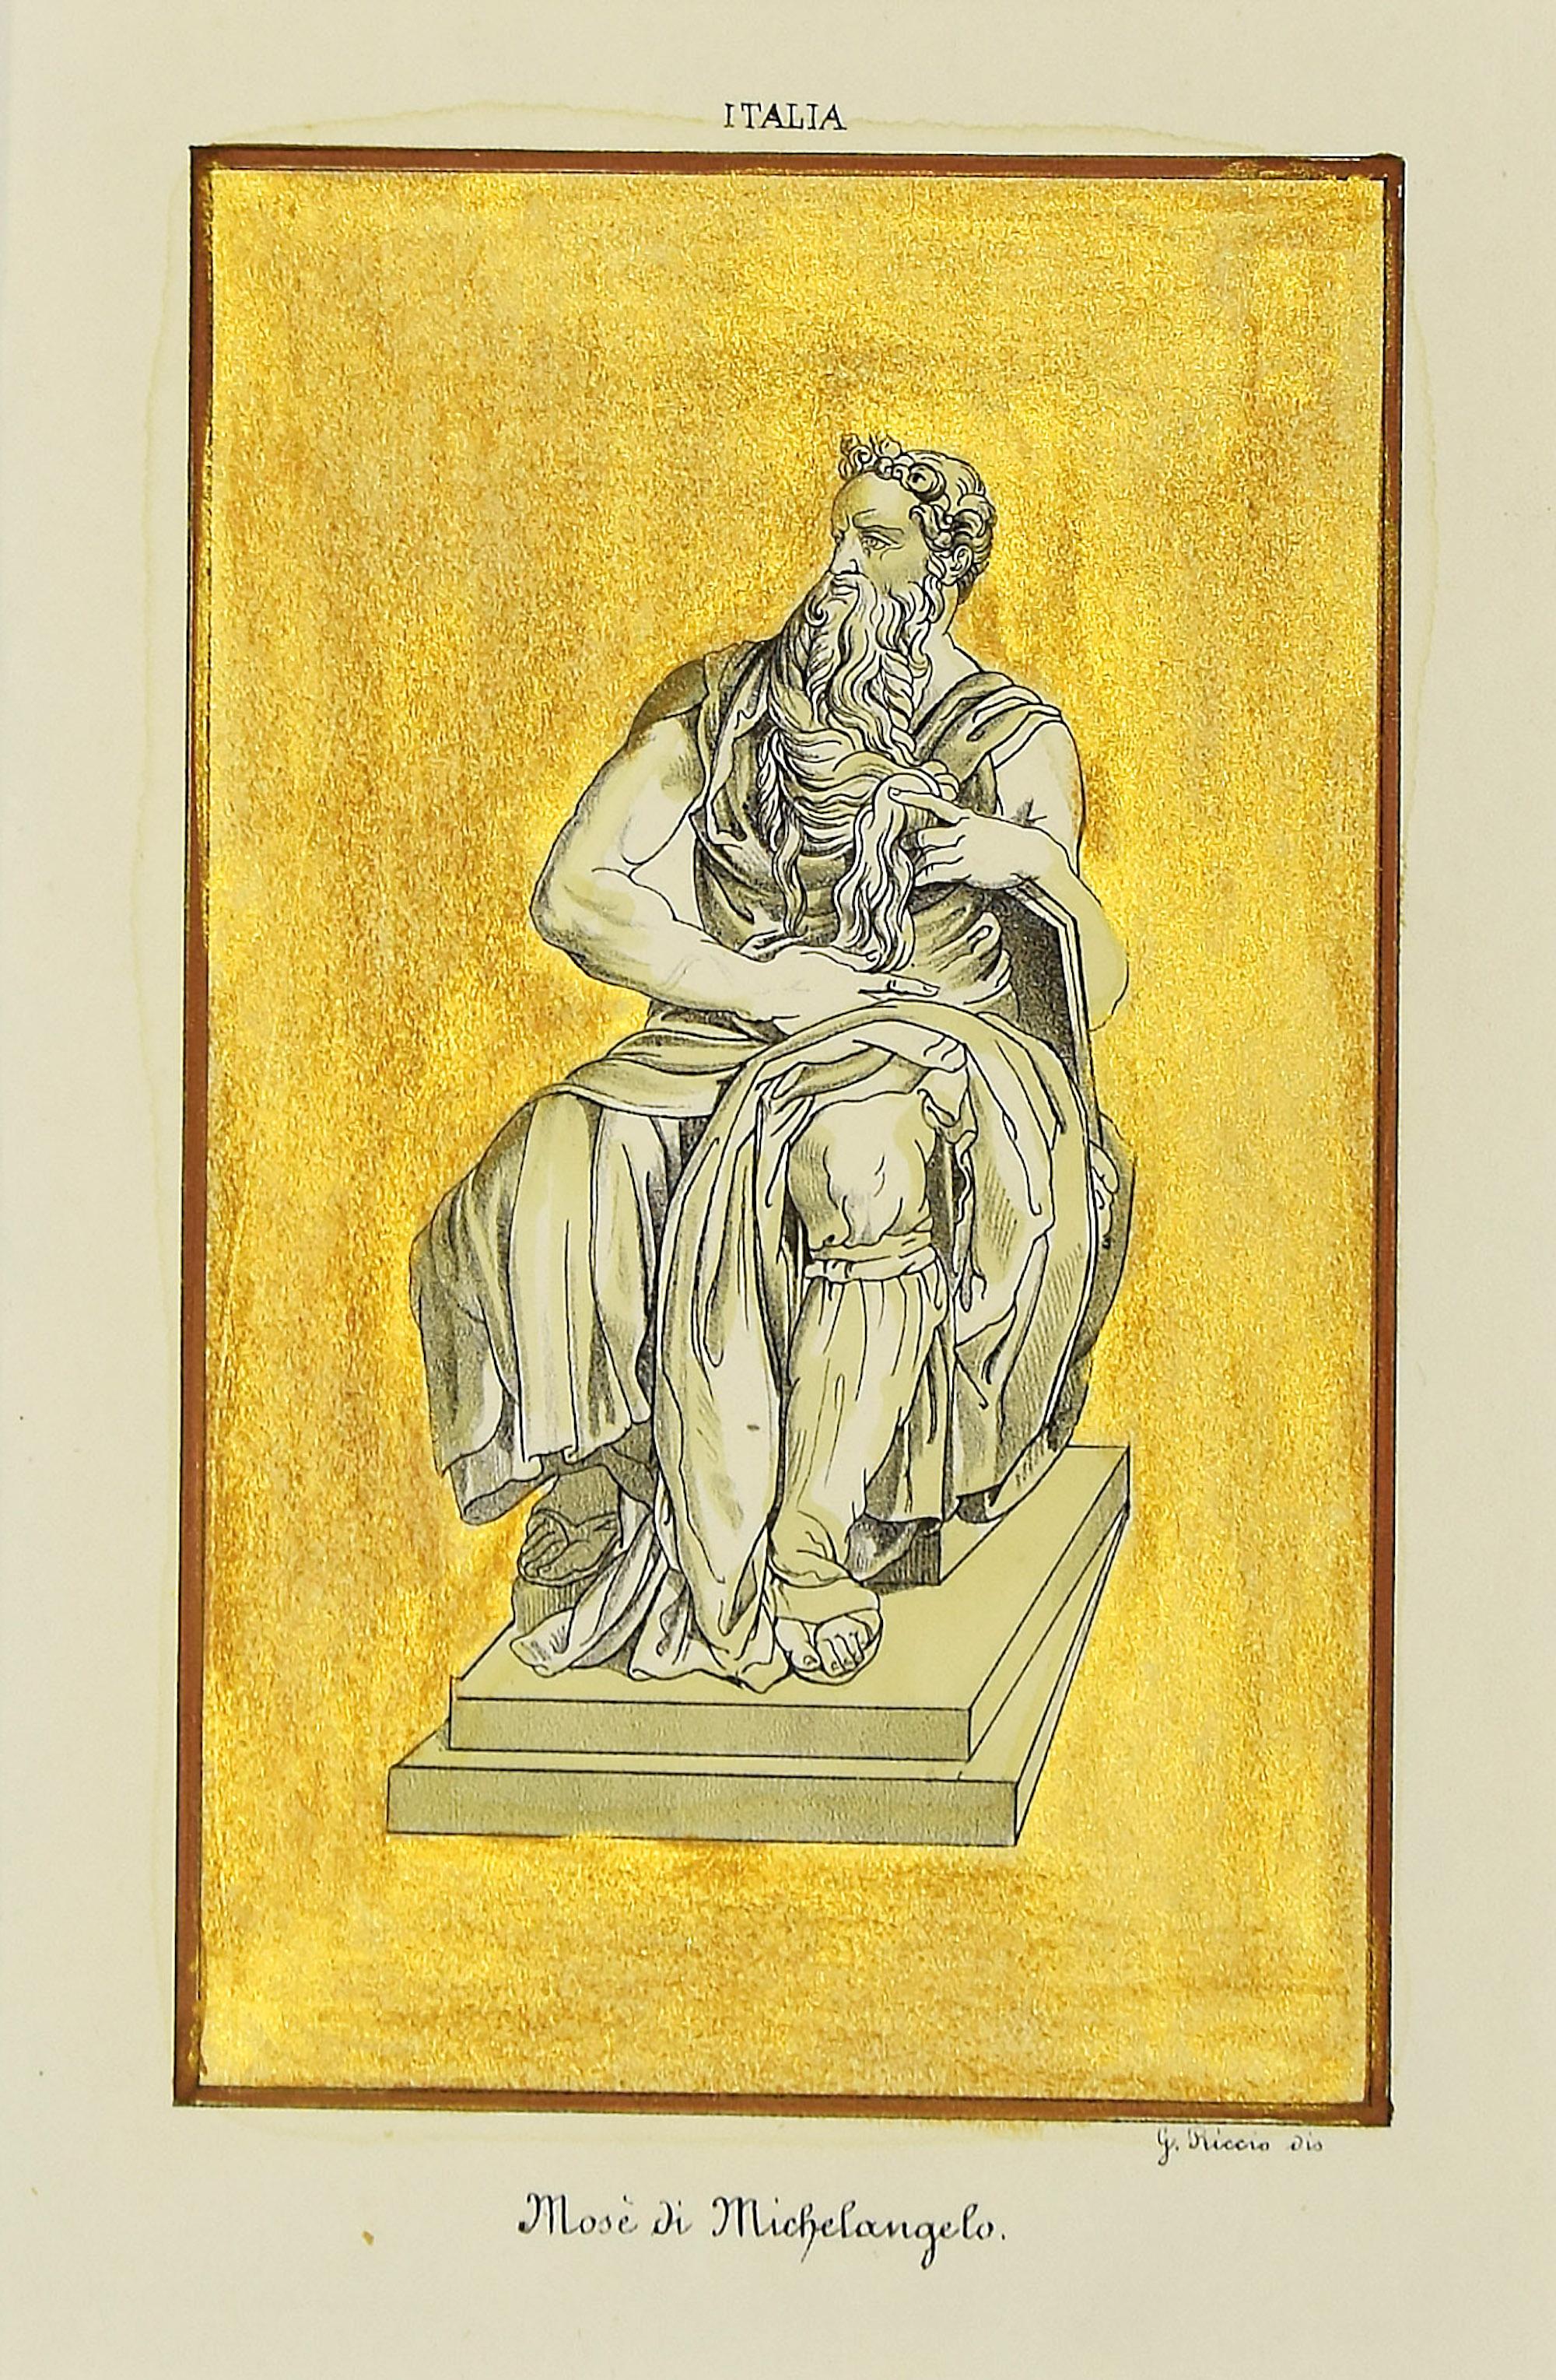 Unknown Figurative Print - Mosè di Michelangelo - Original Etching signed "G. Riccio" - 20th Century